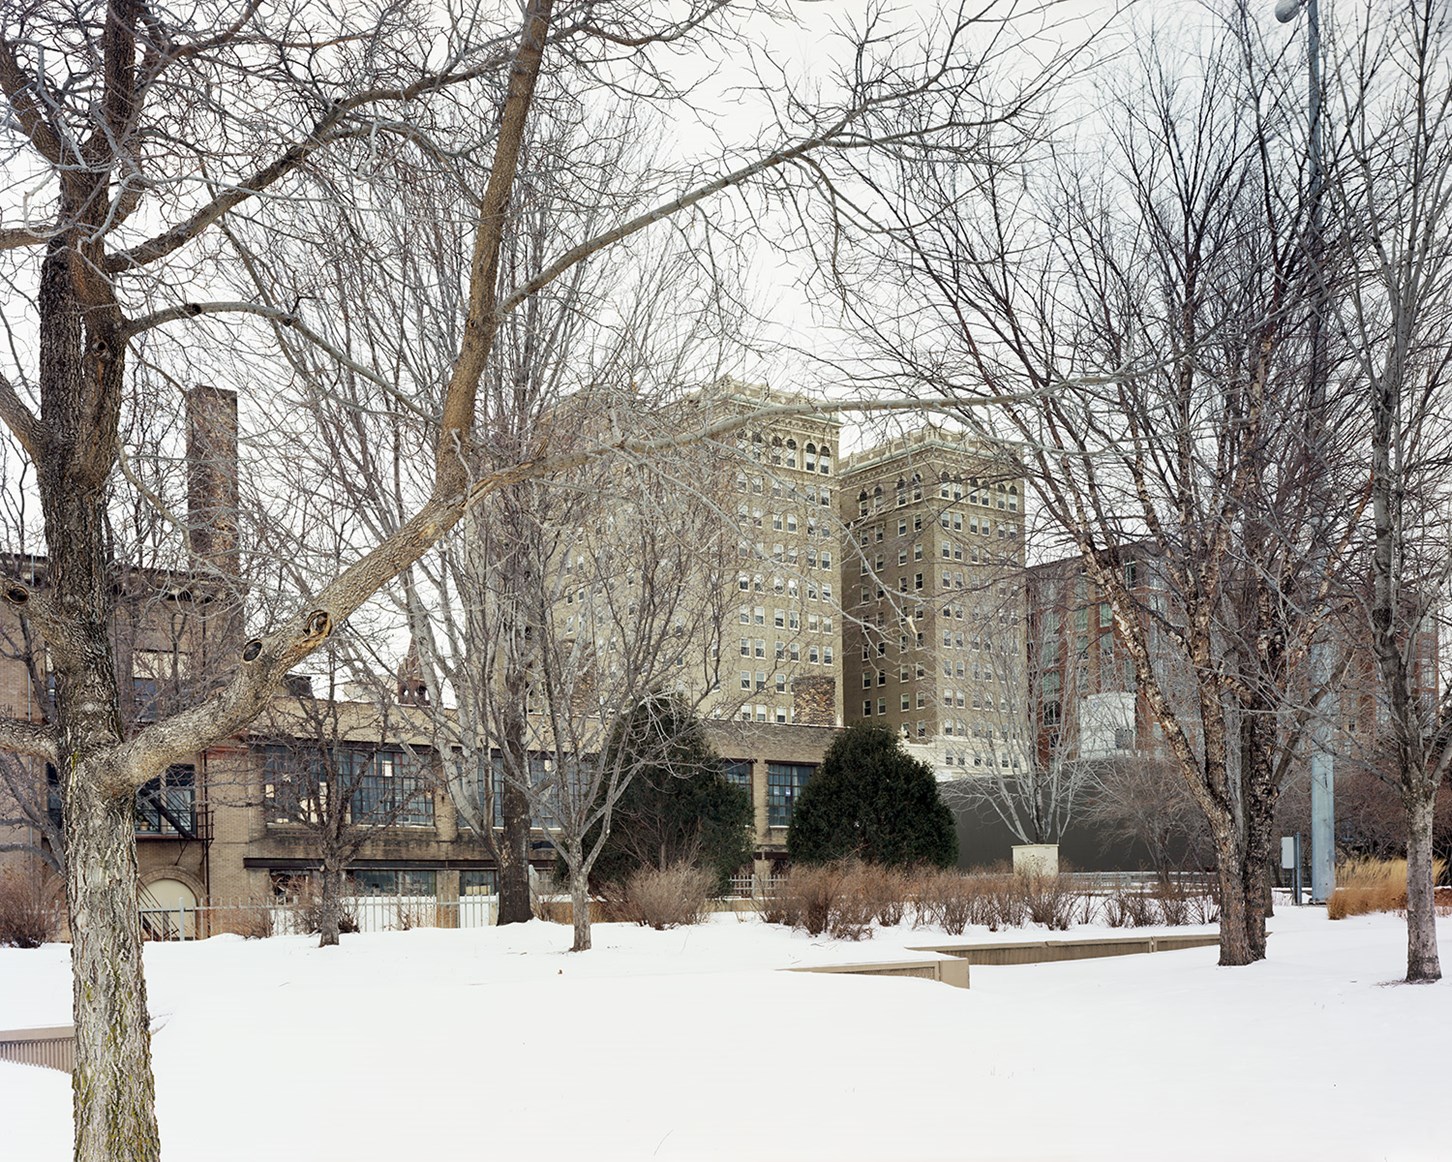 Greysolon Plaza, Duluth, Minnesota, January 2013